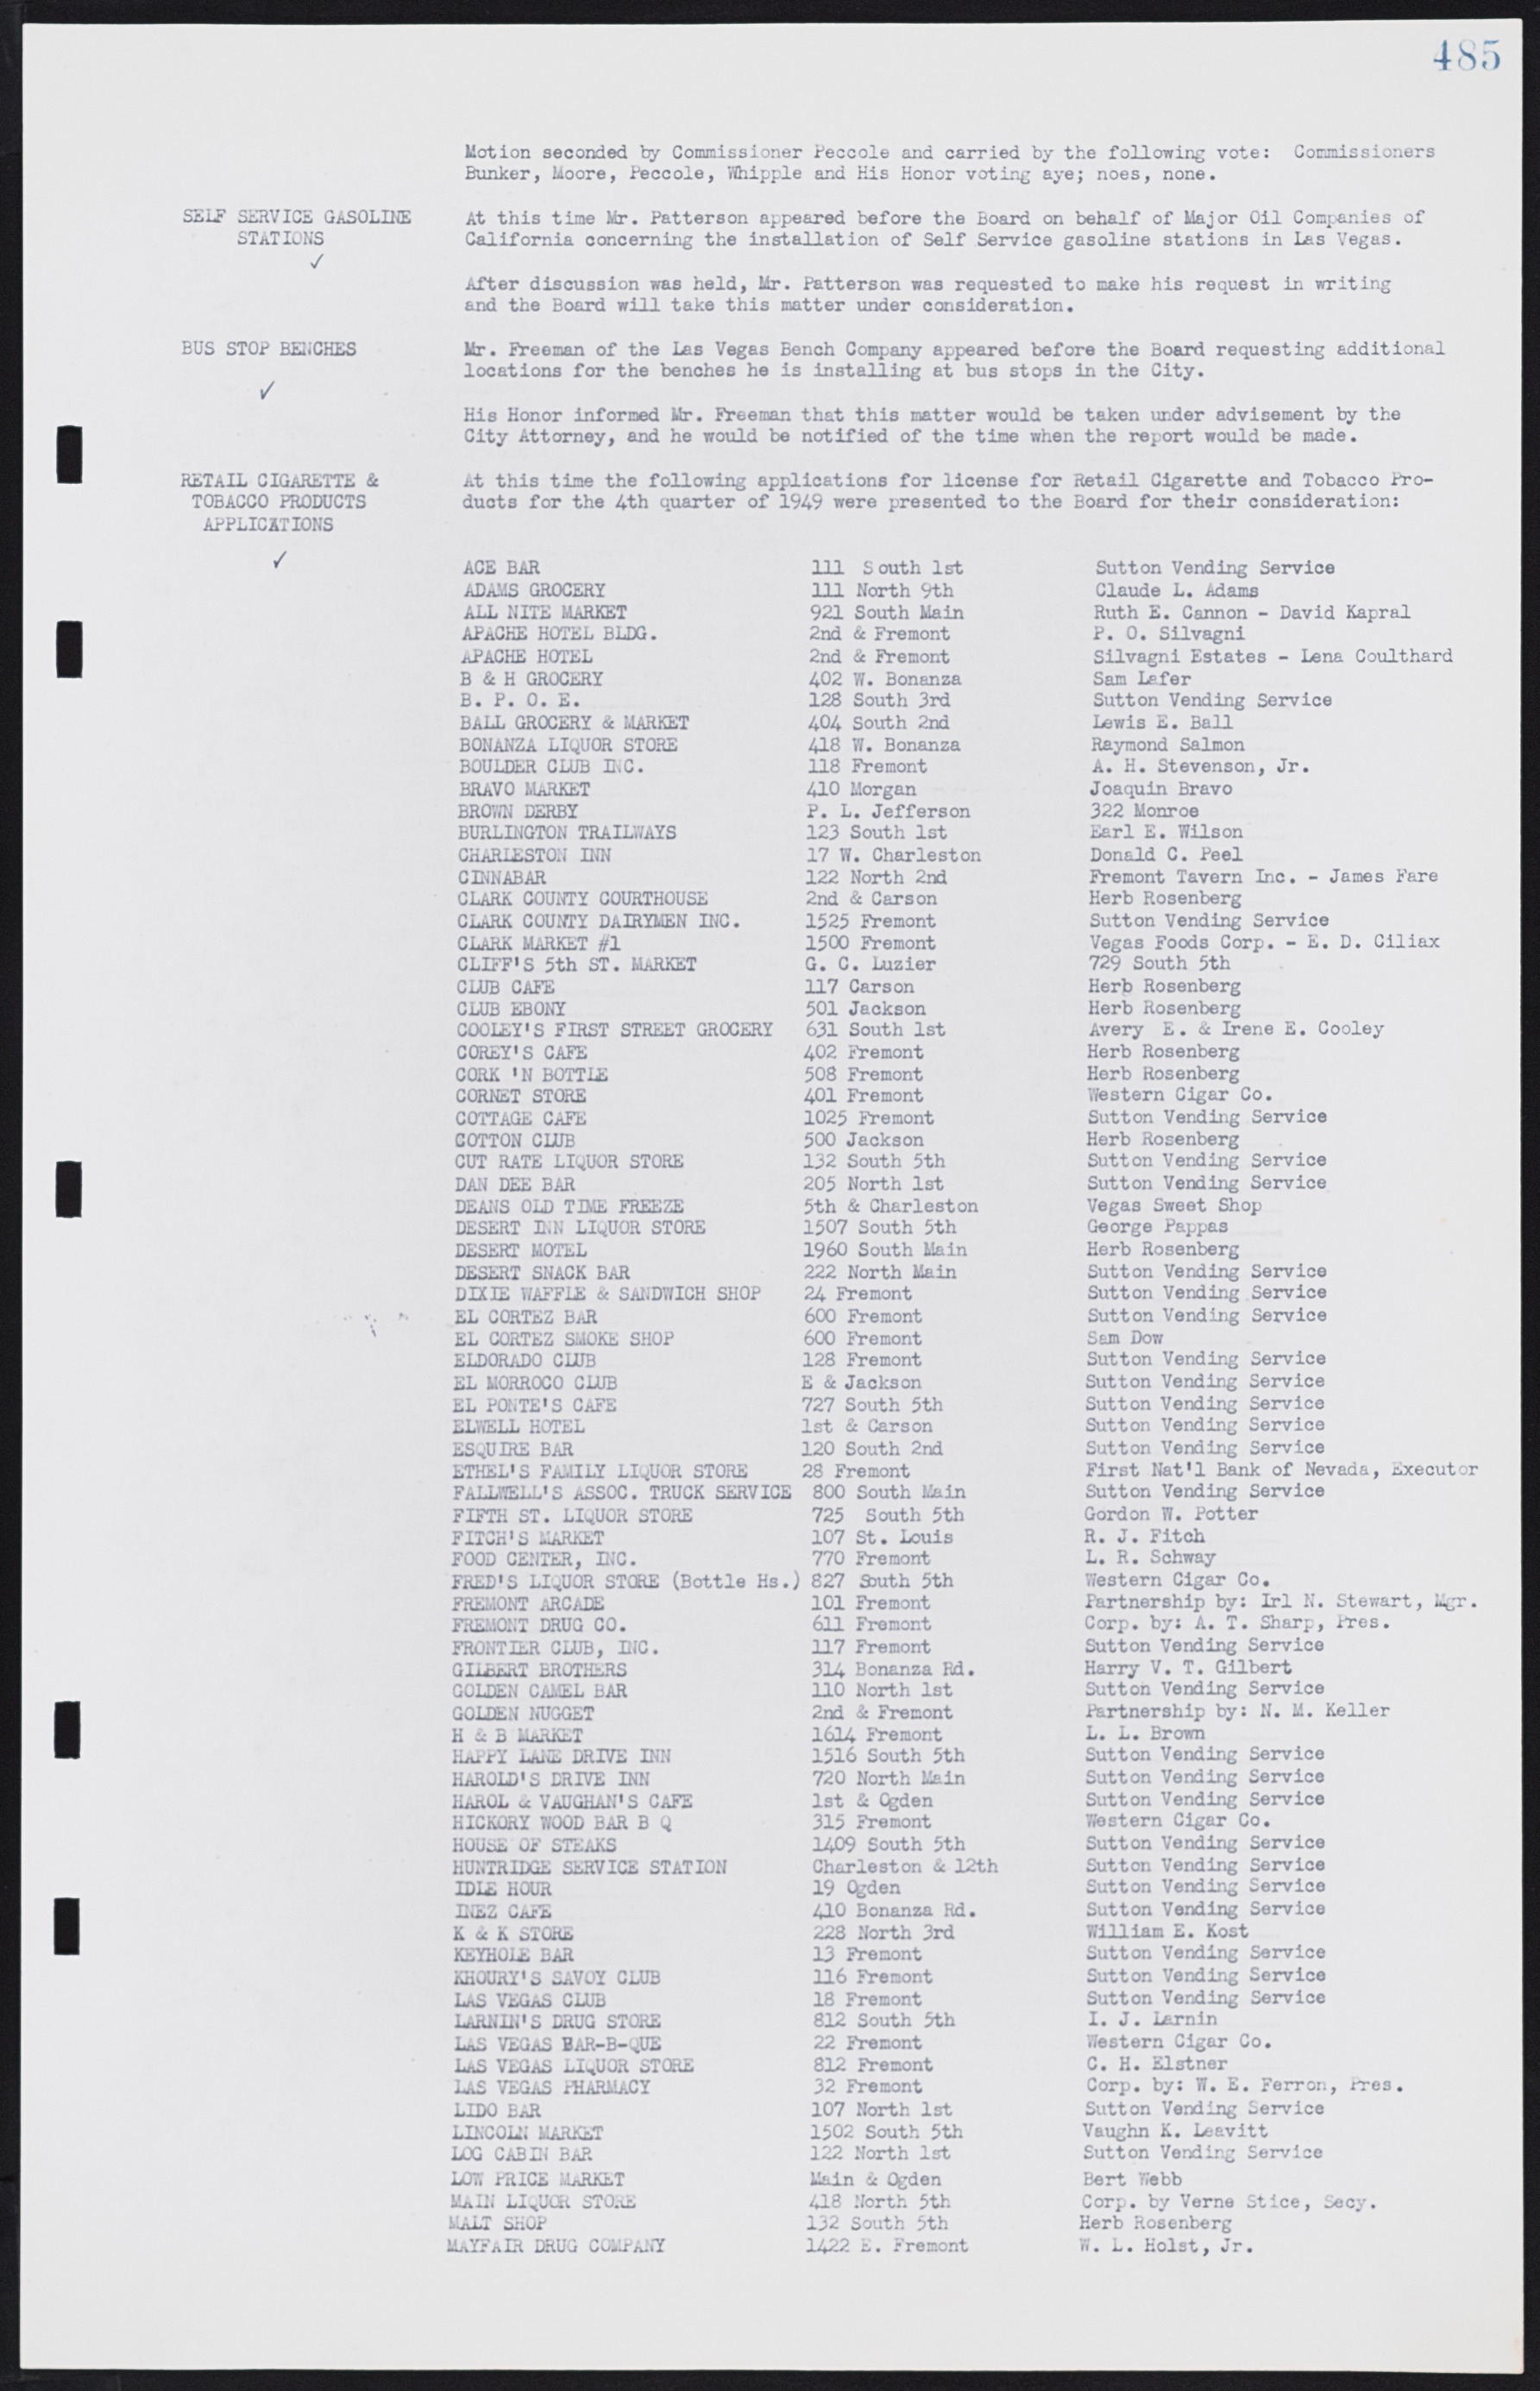 Las Vegas City Commission Minutes, January 7, 1947 to October 26, 1949, lvc000006-517